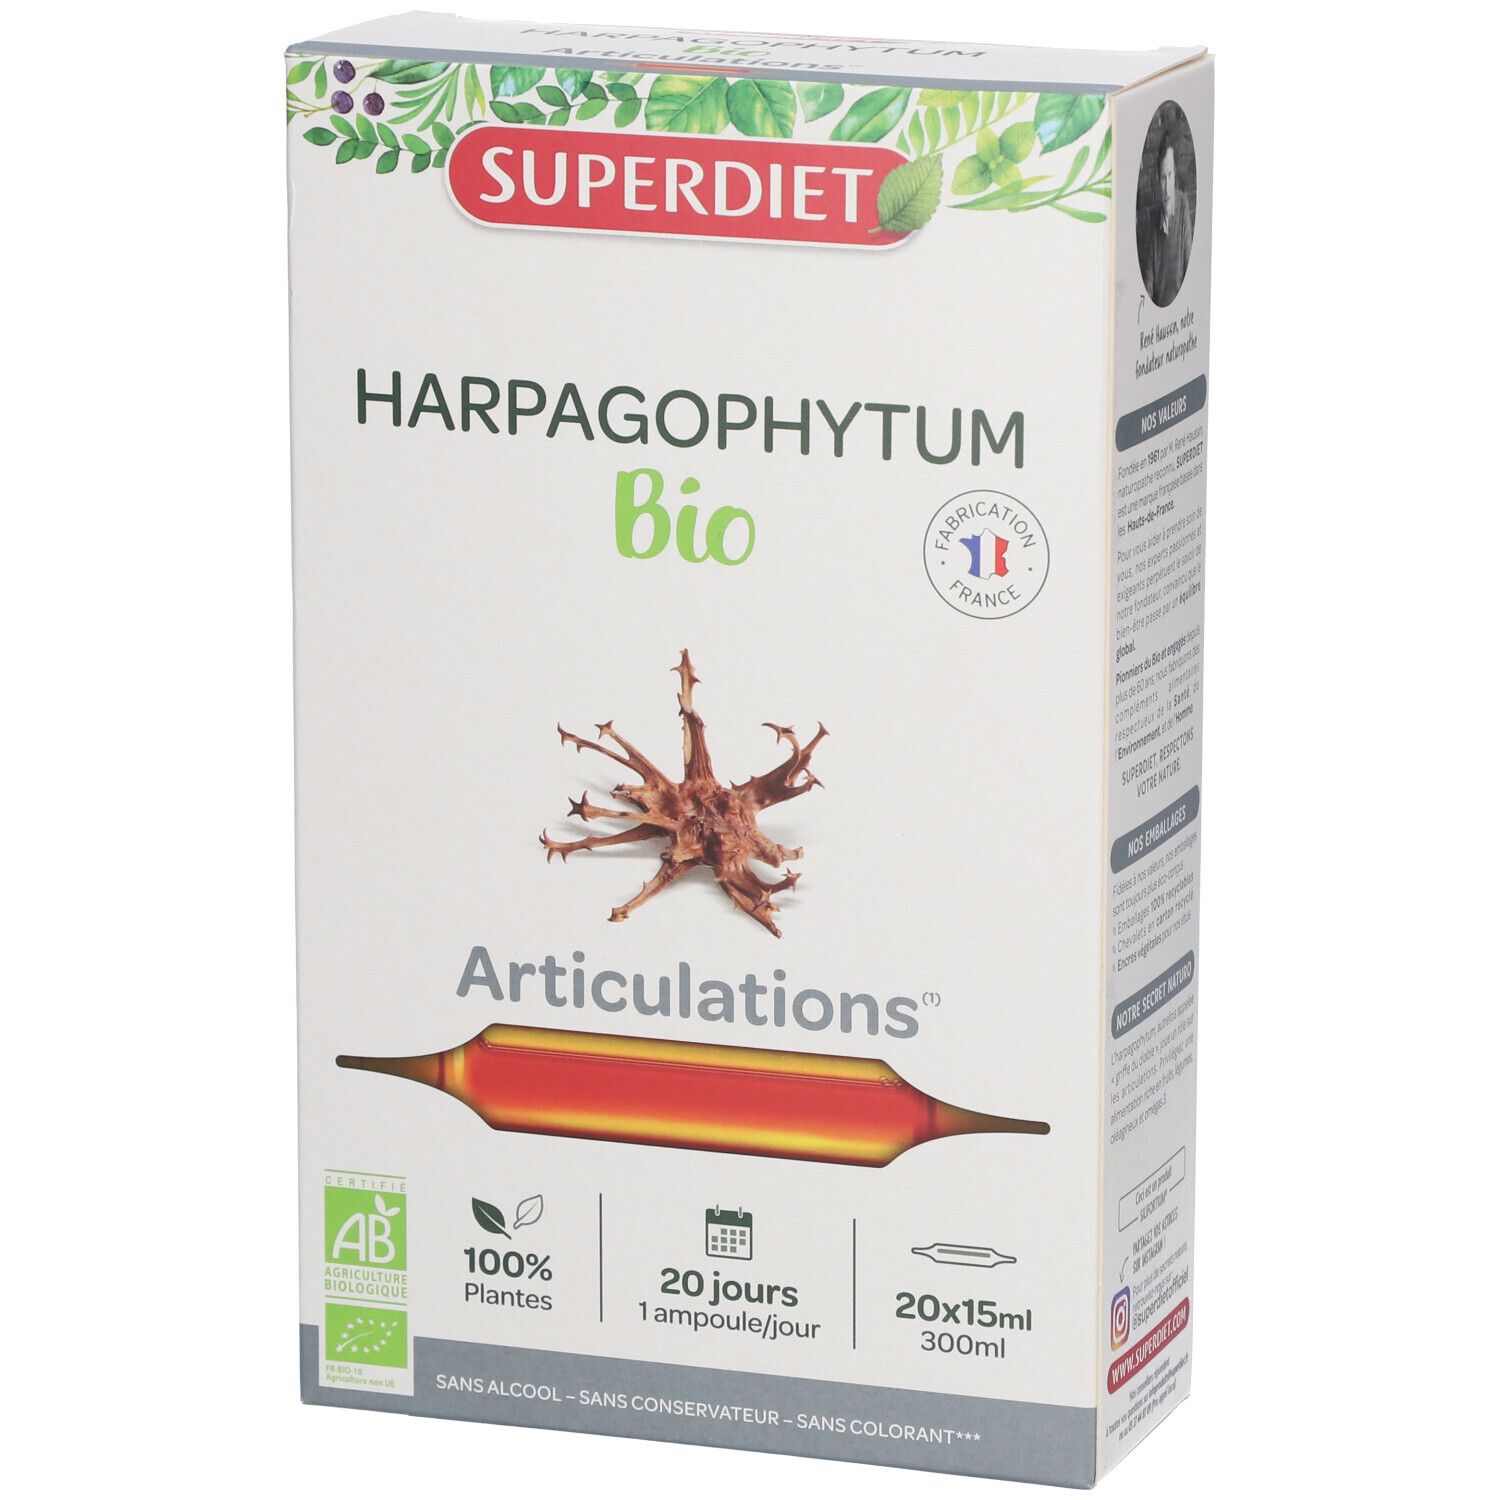 Super Diet Harpagophytum Bio Articulations Ampoule